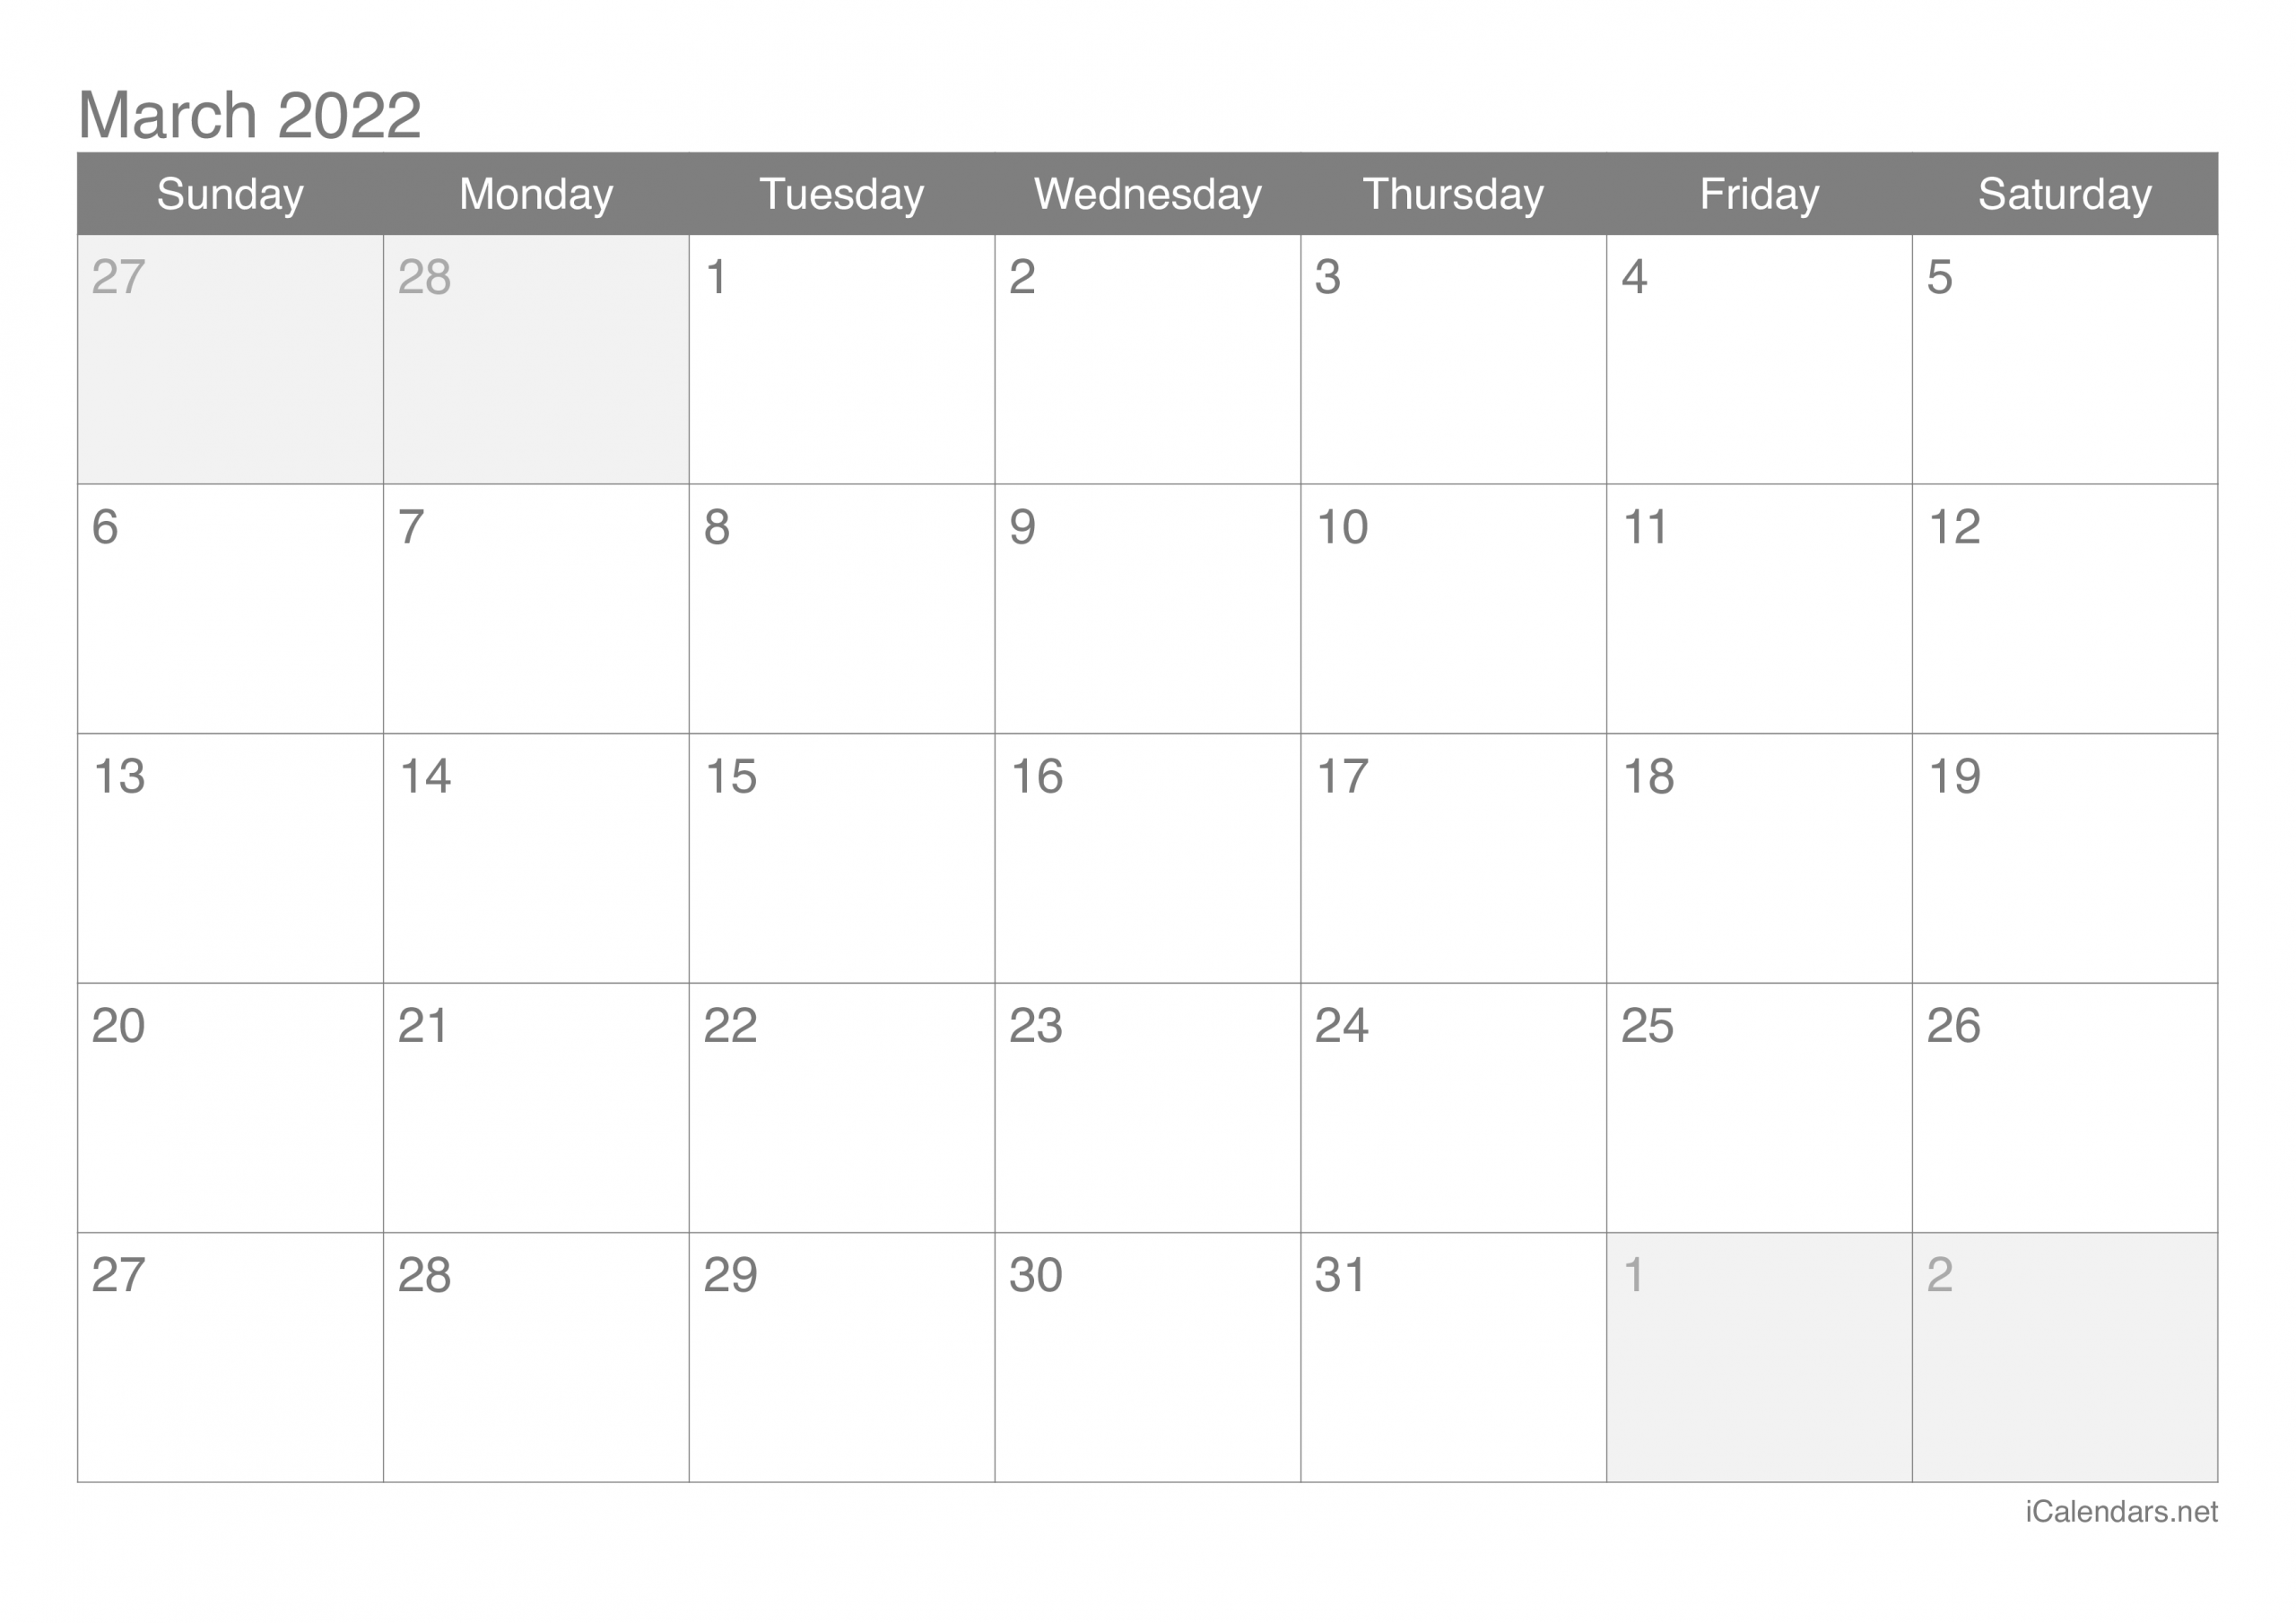 March 2022 Printable Calendar - Icalendars